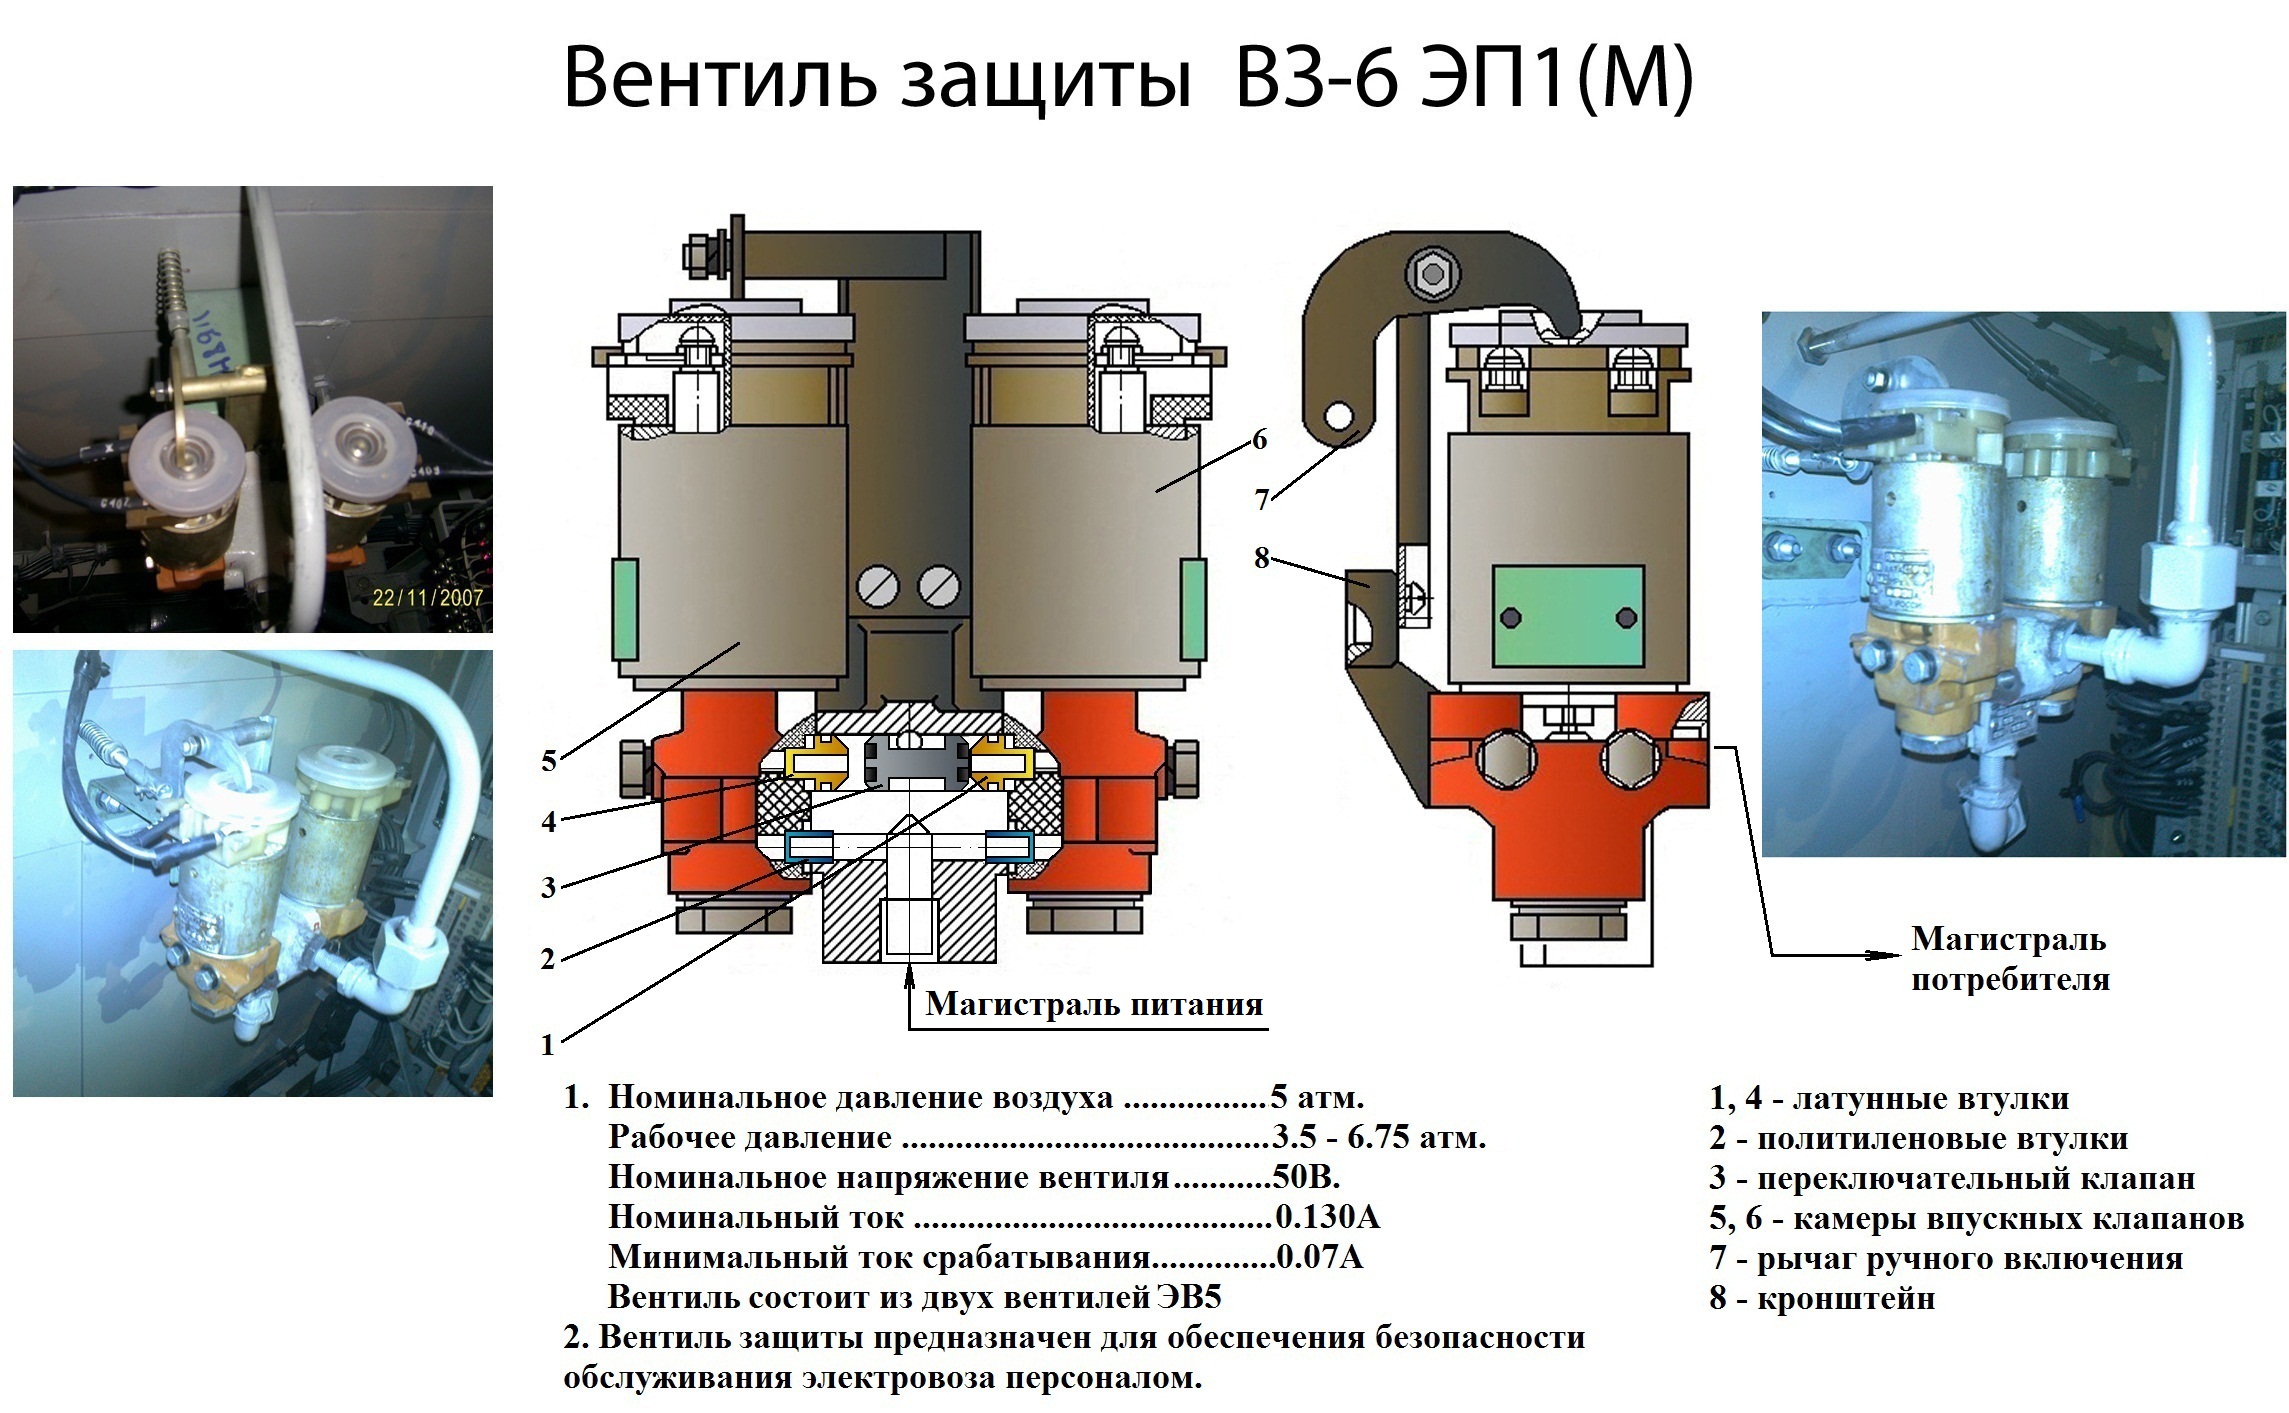 устройство кулачкового контактора кэ-153 - student2.ru